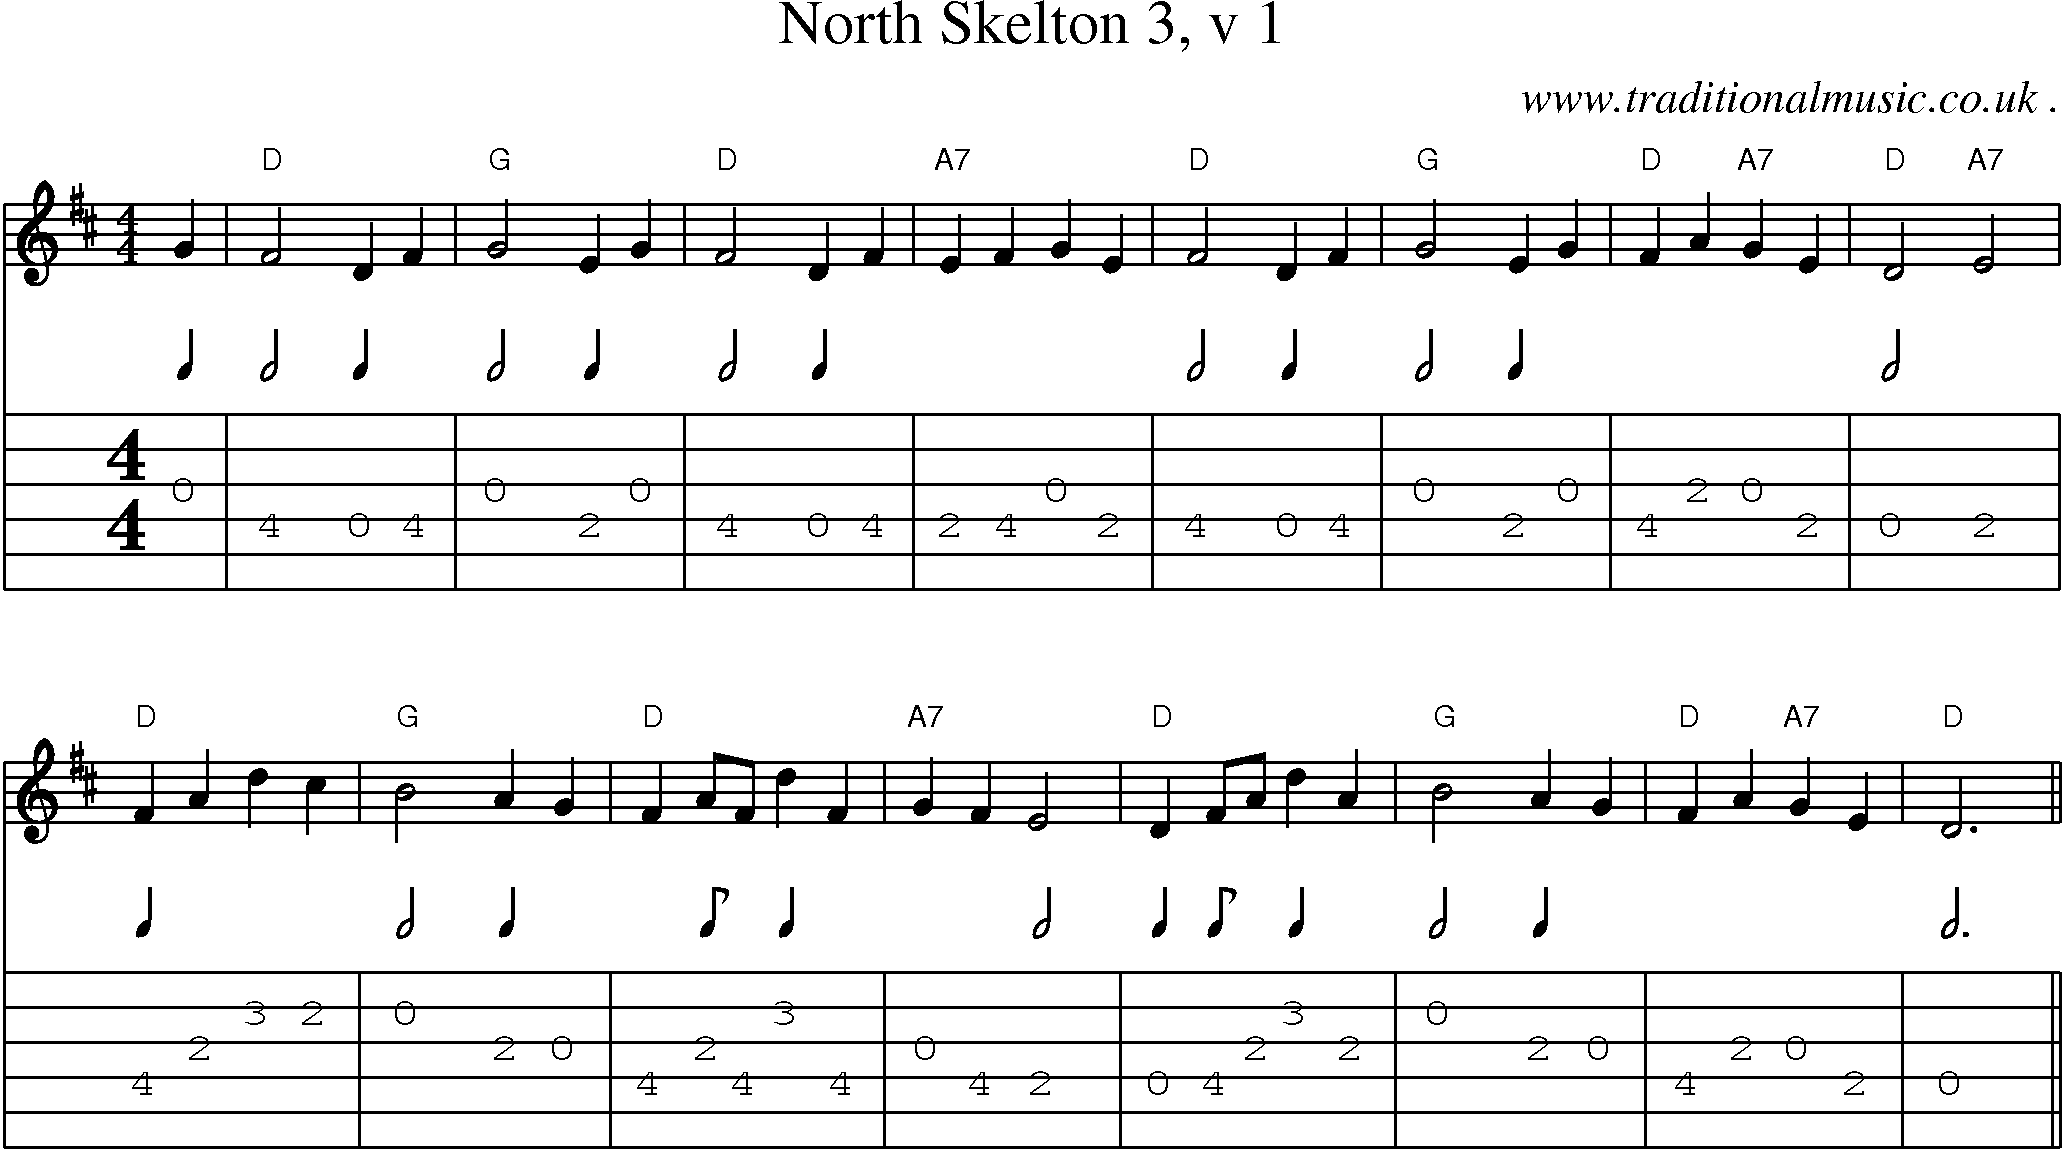 Sheet-Music and Guitar Tabs for North Skelton 3 V 1